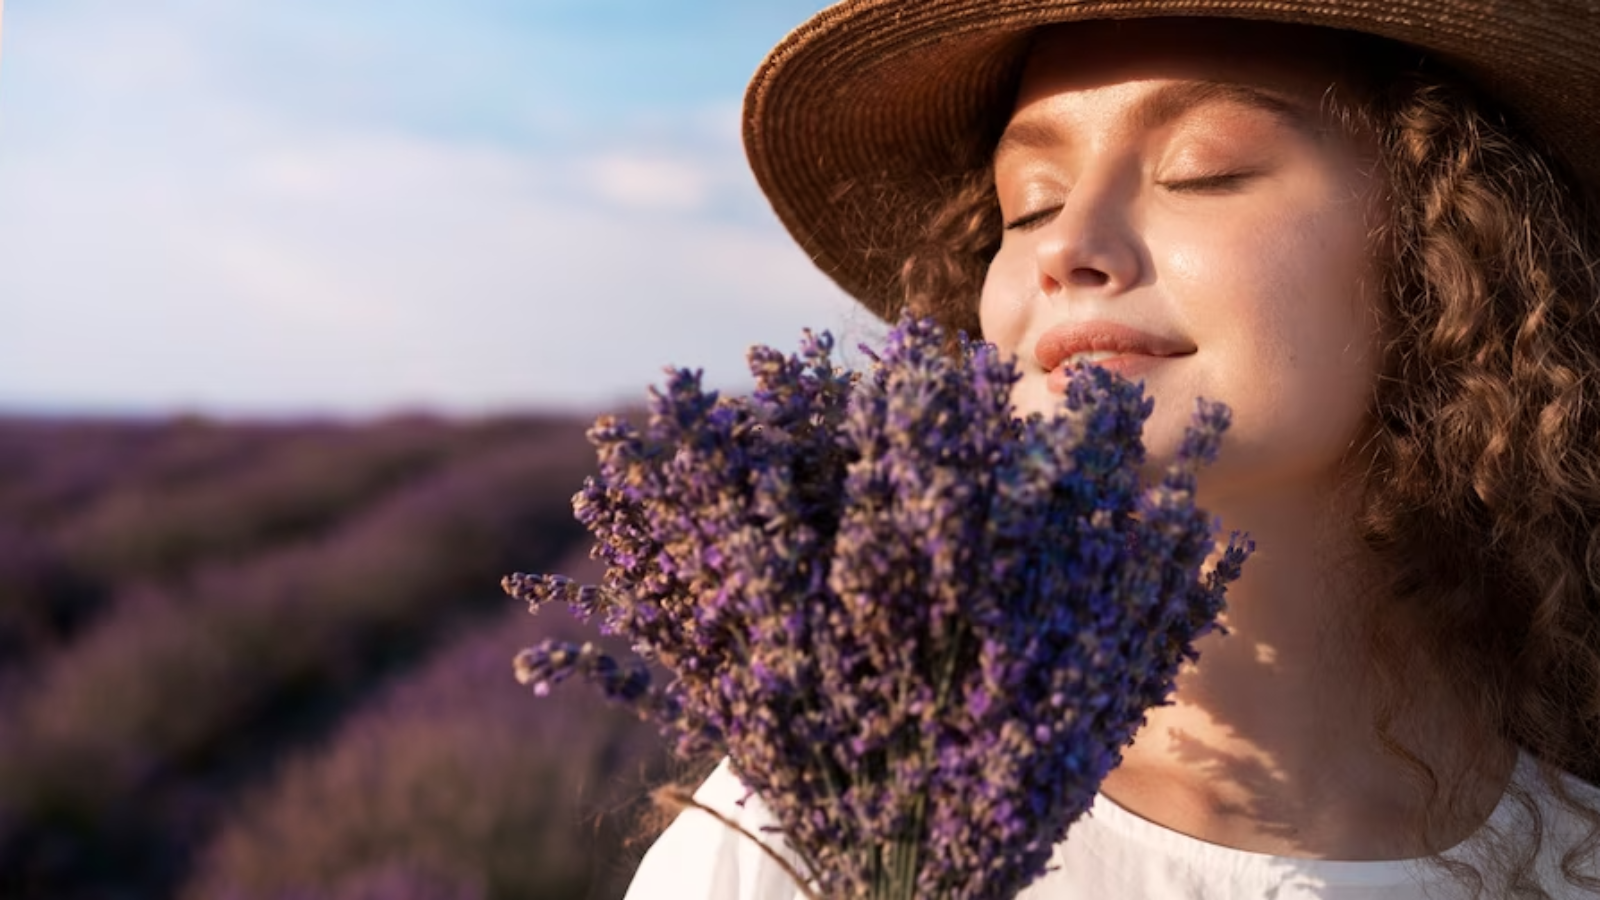 side-view-woman-smelling-lavender_23-2149555281-jpg-900×506-